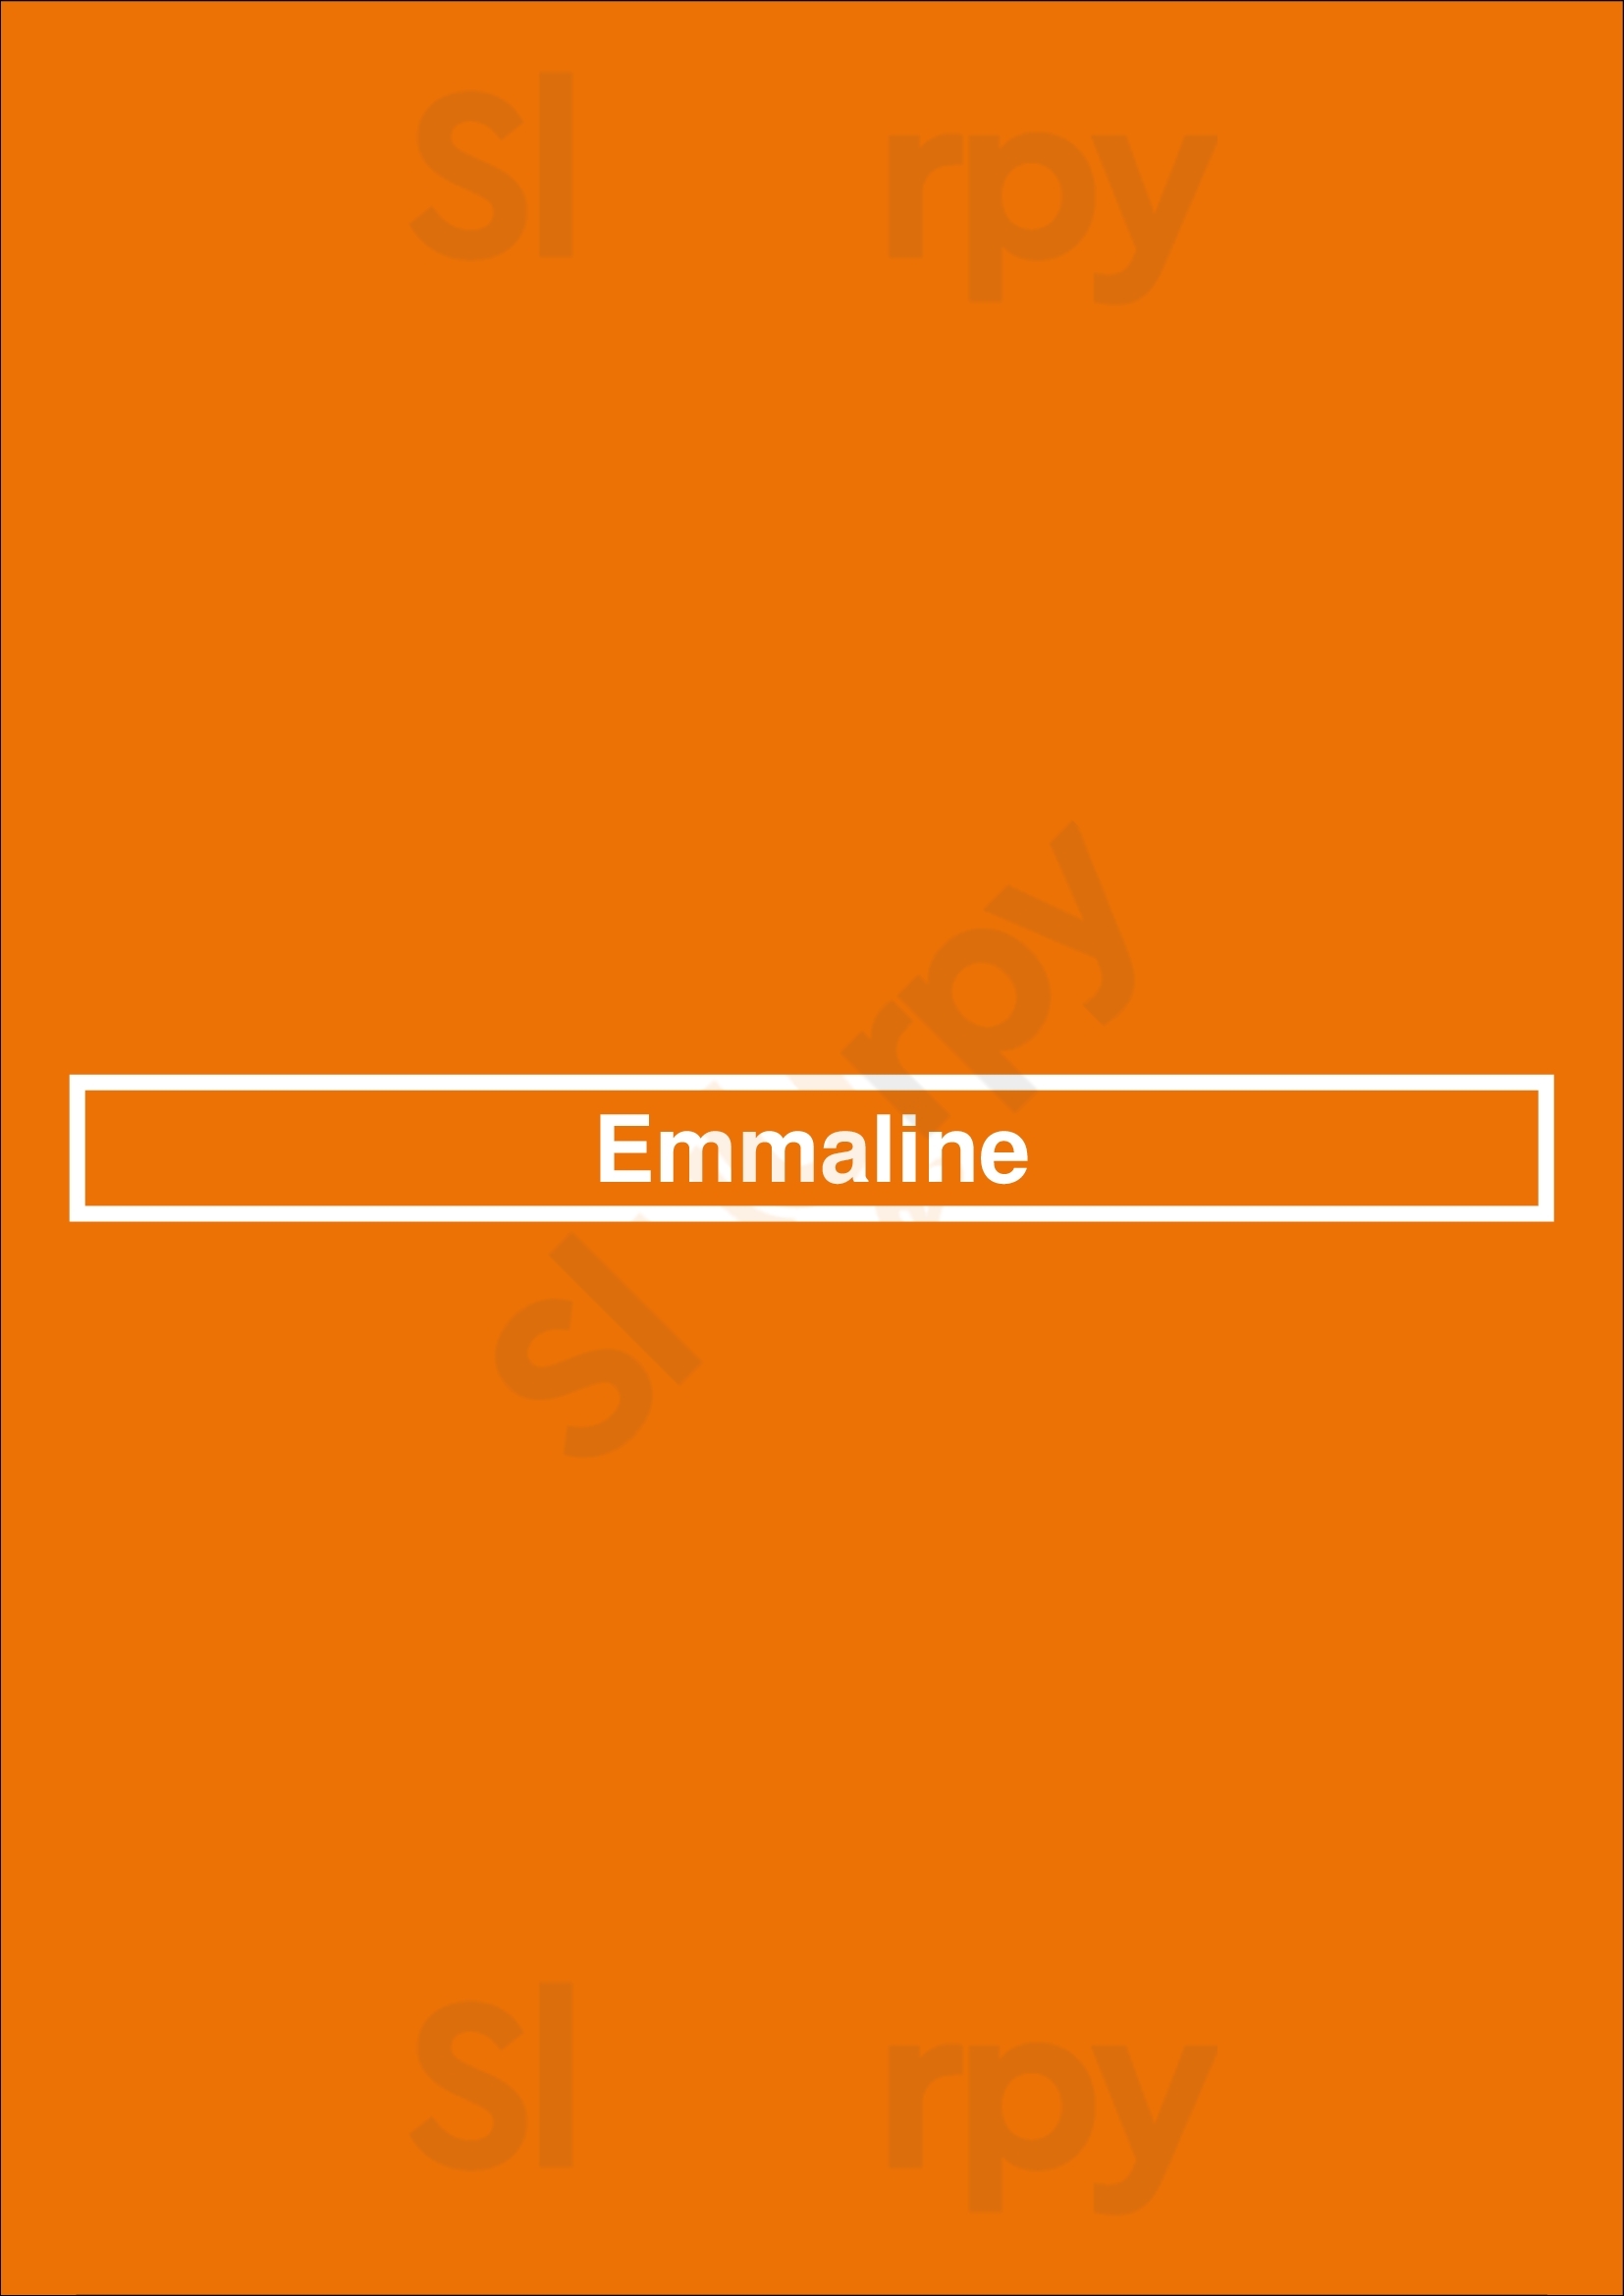 Emmaline Houston Menu - 1